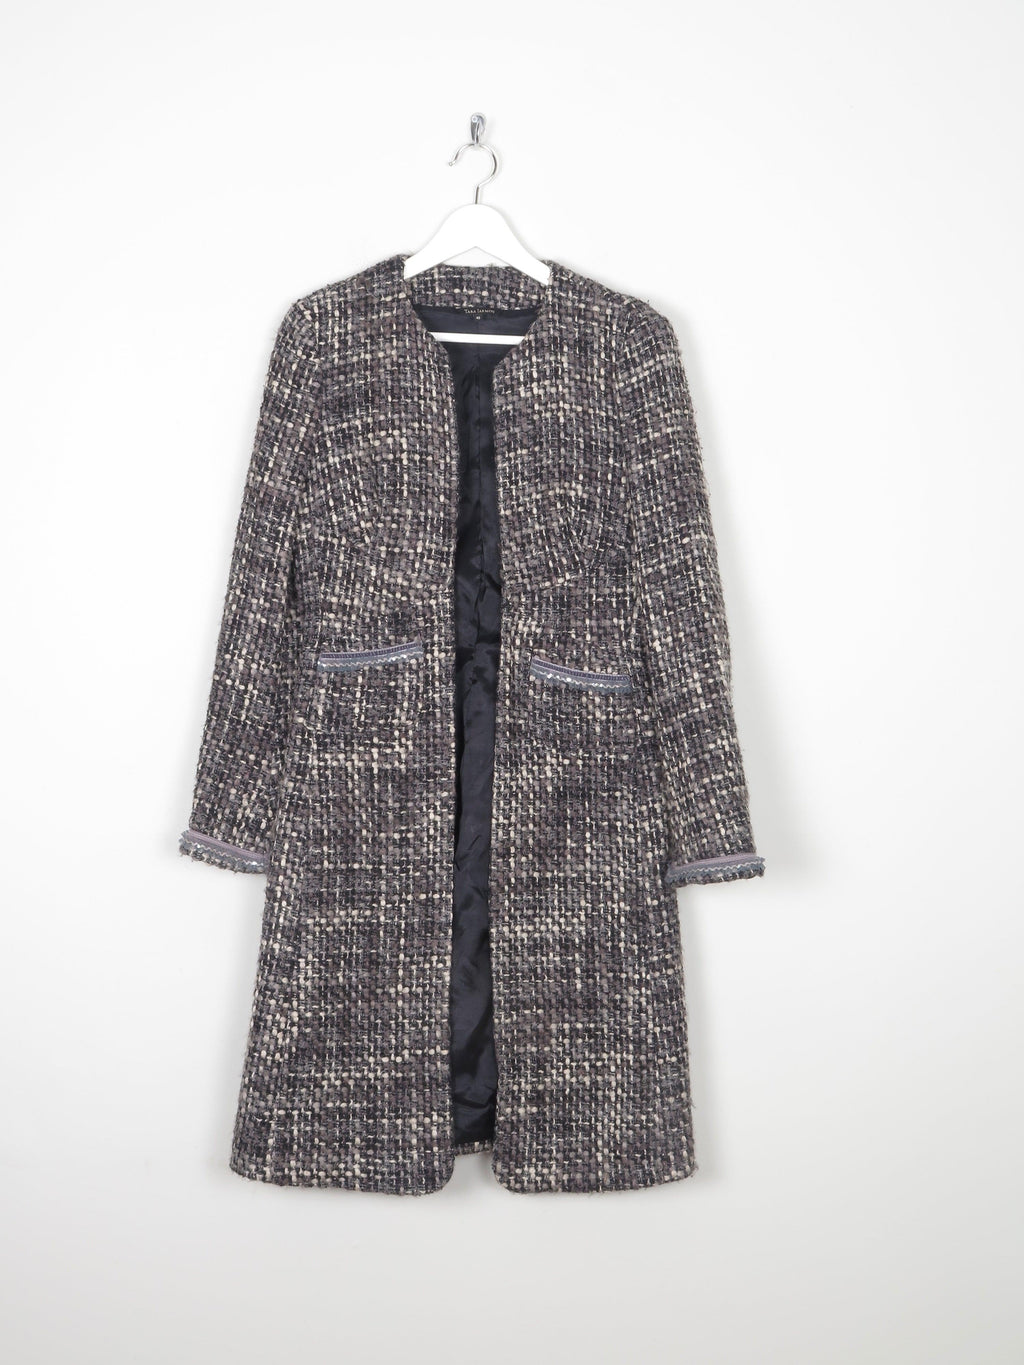 Women's 'Tara Jarmon' Tweed Coat XS 6/8 - The Harlequin